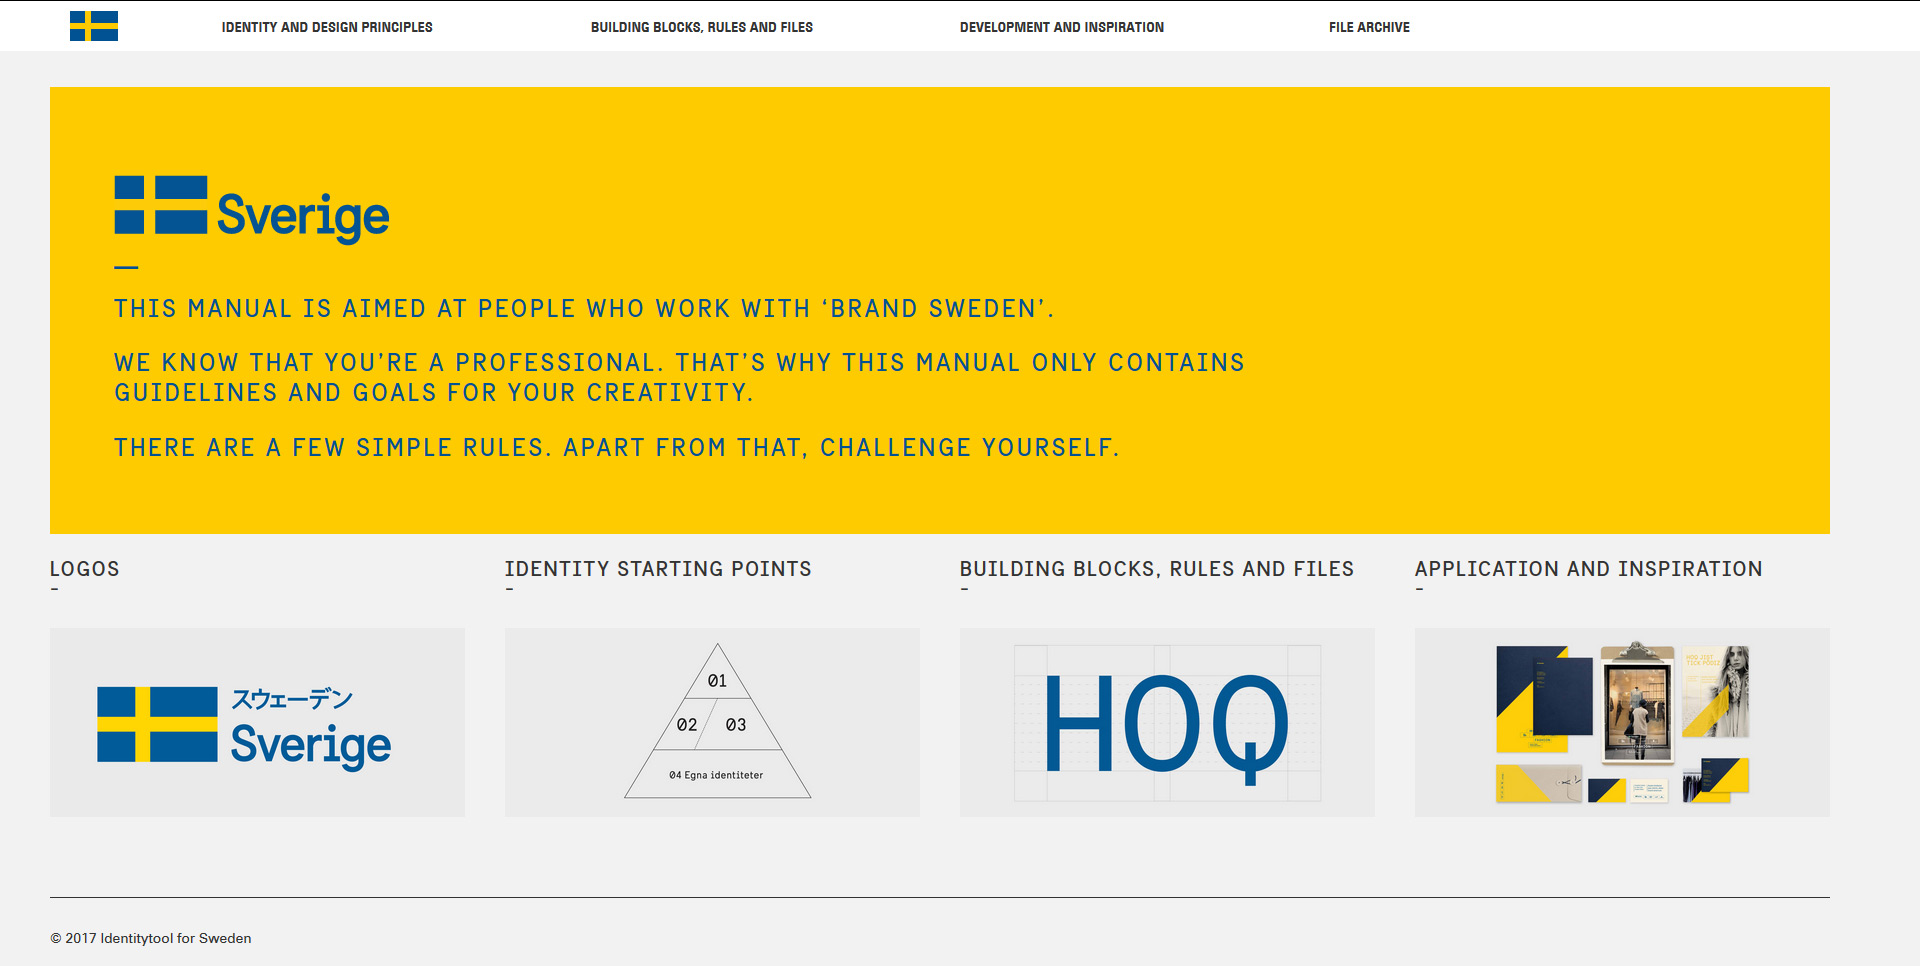 The Swedish Brand Portal